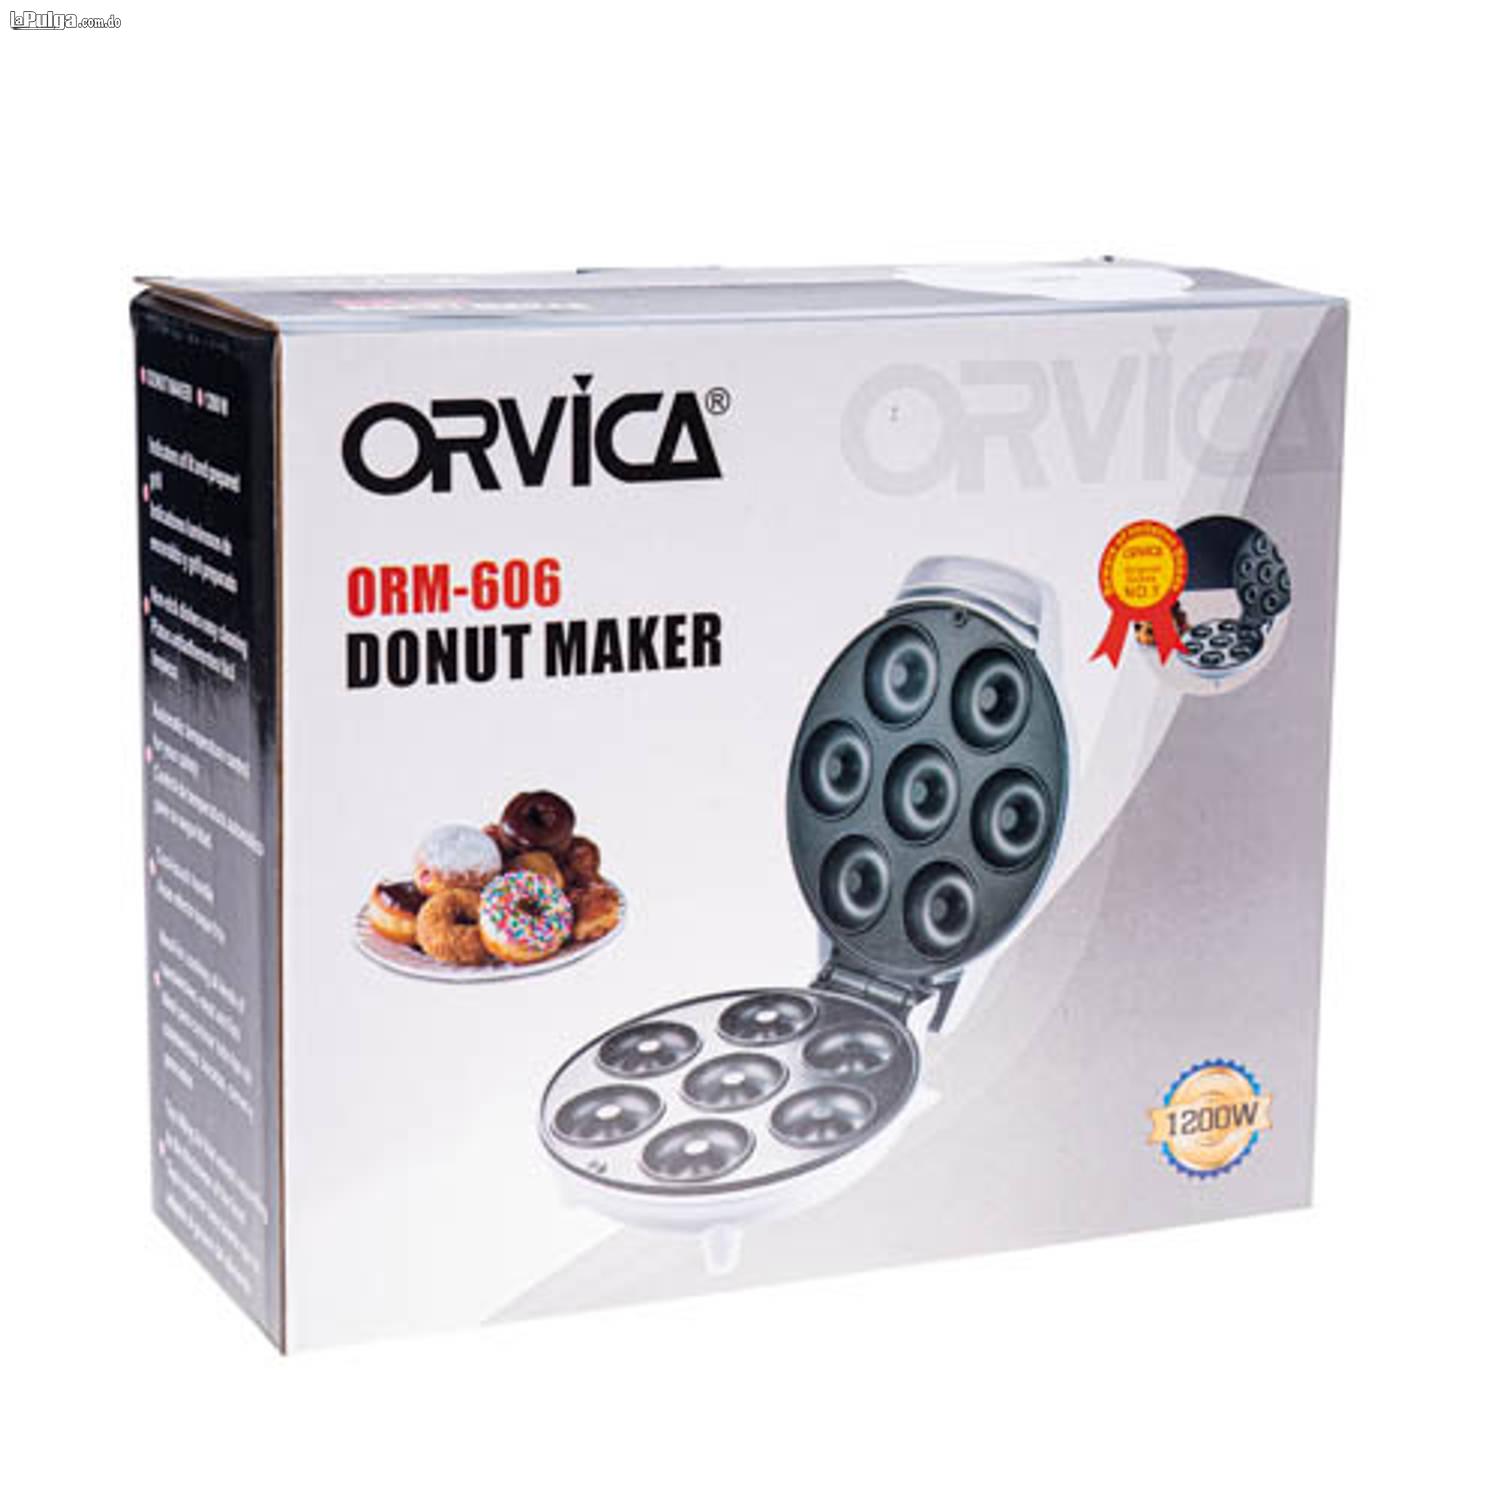 Maquina de hacer Donas donut maker. Foto 7160096-2.jpg